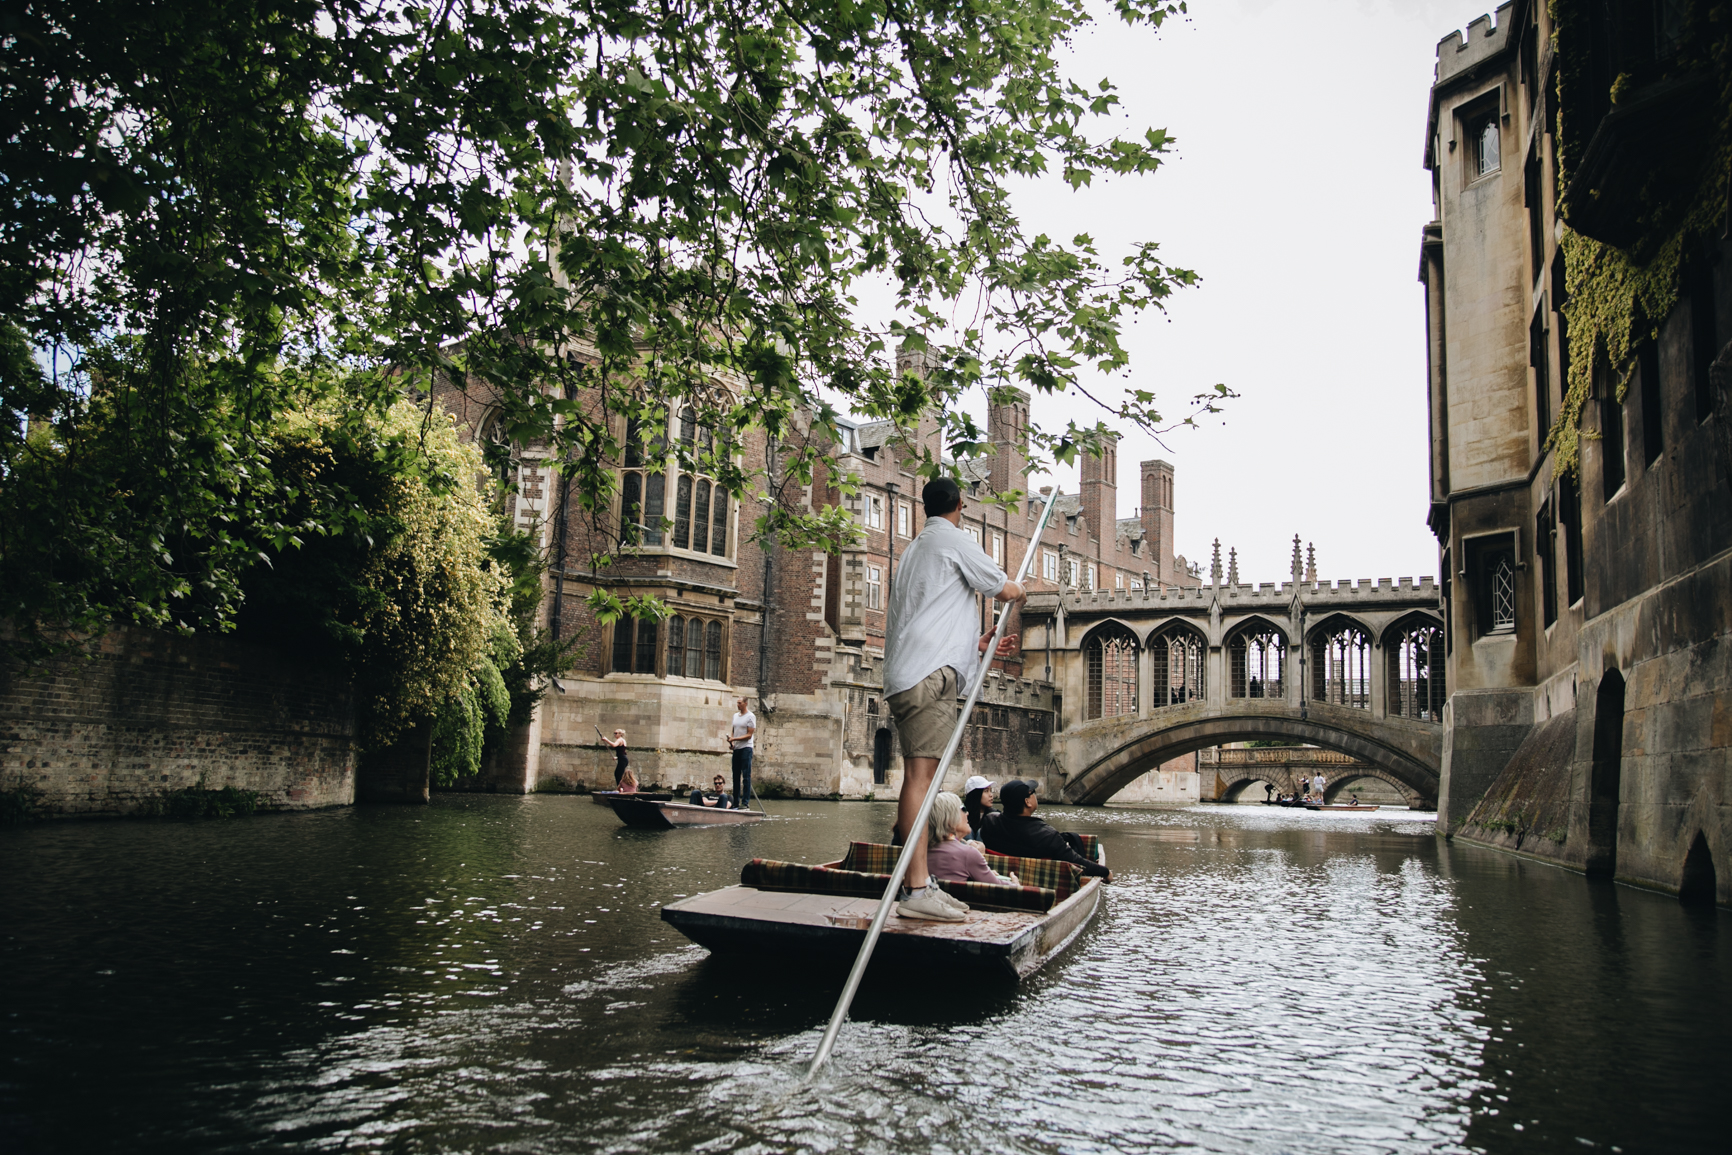 Punting-in-Cambridge-pont-des-soupirs-universite.jpg